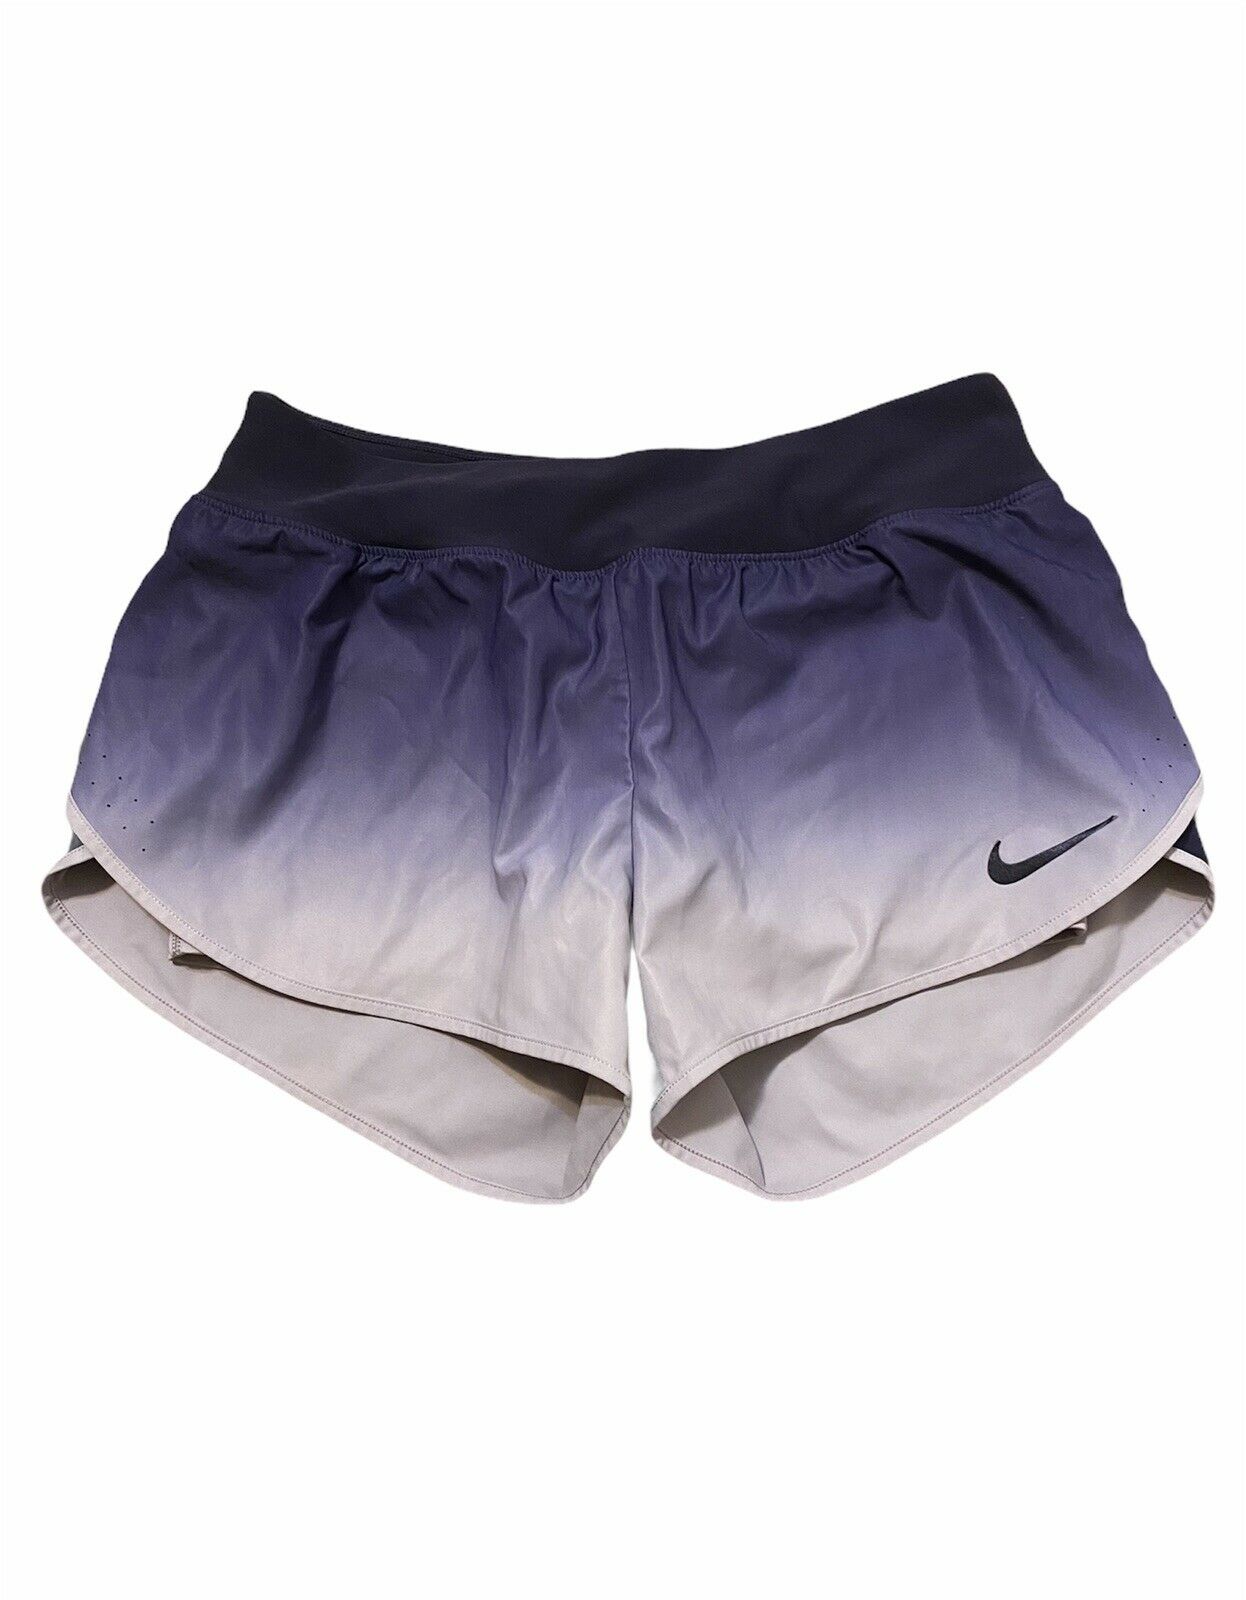 Nike Burst Court Flex 2 In 1 Tennis Shorts Dri Fit Women's Size S Purple Nwot